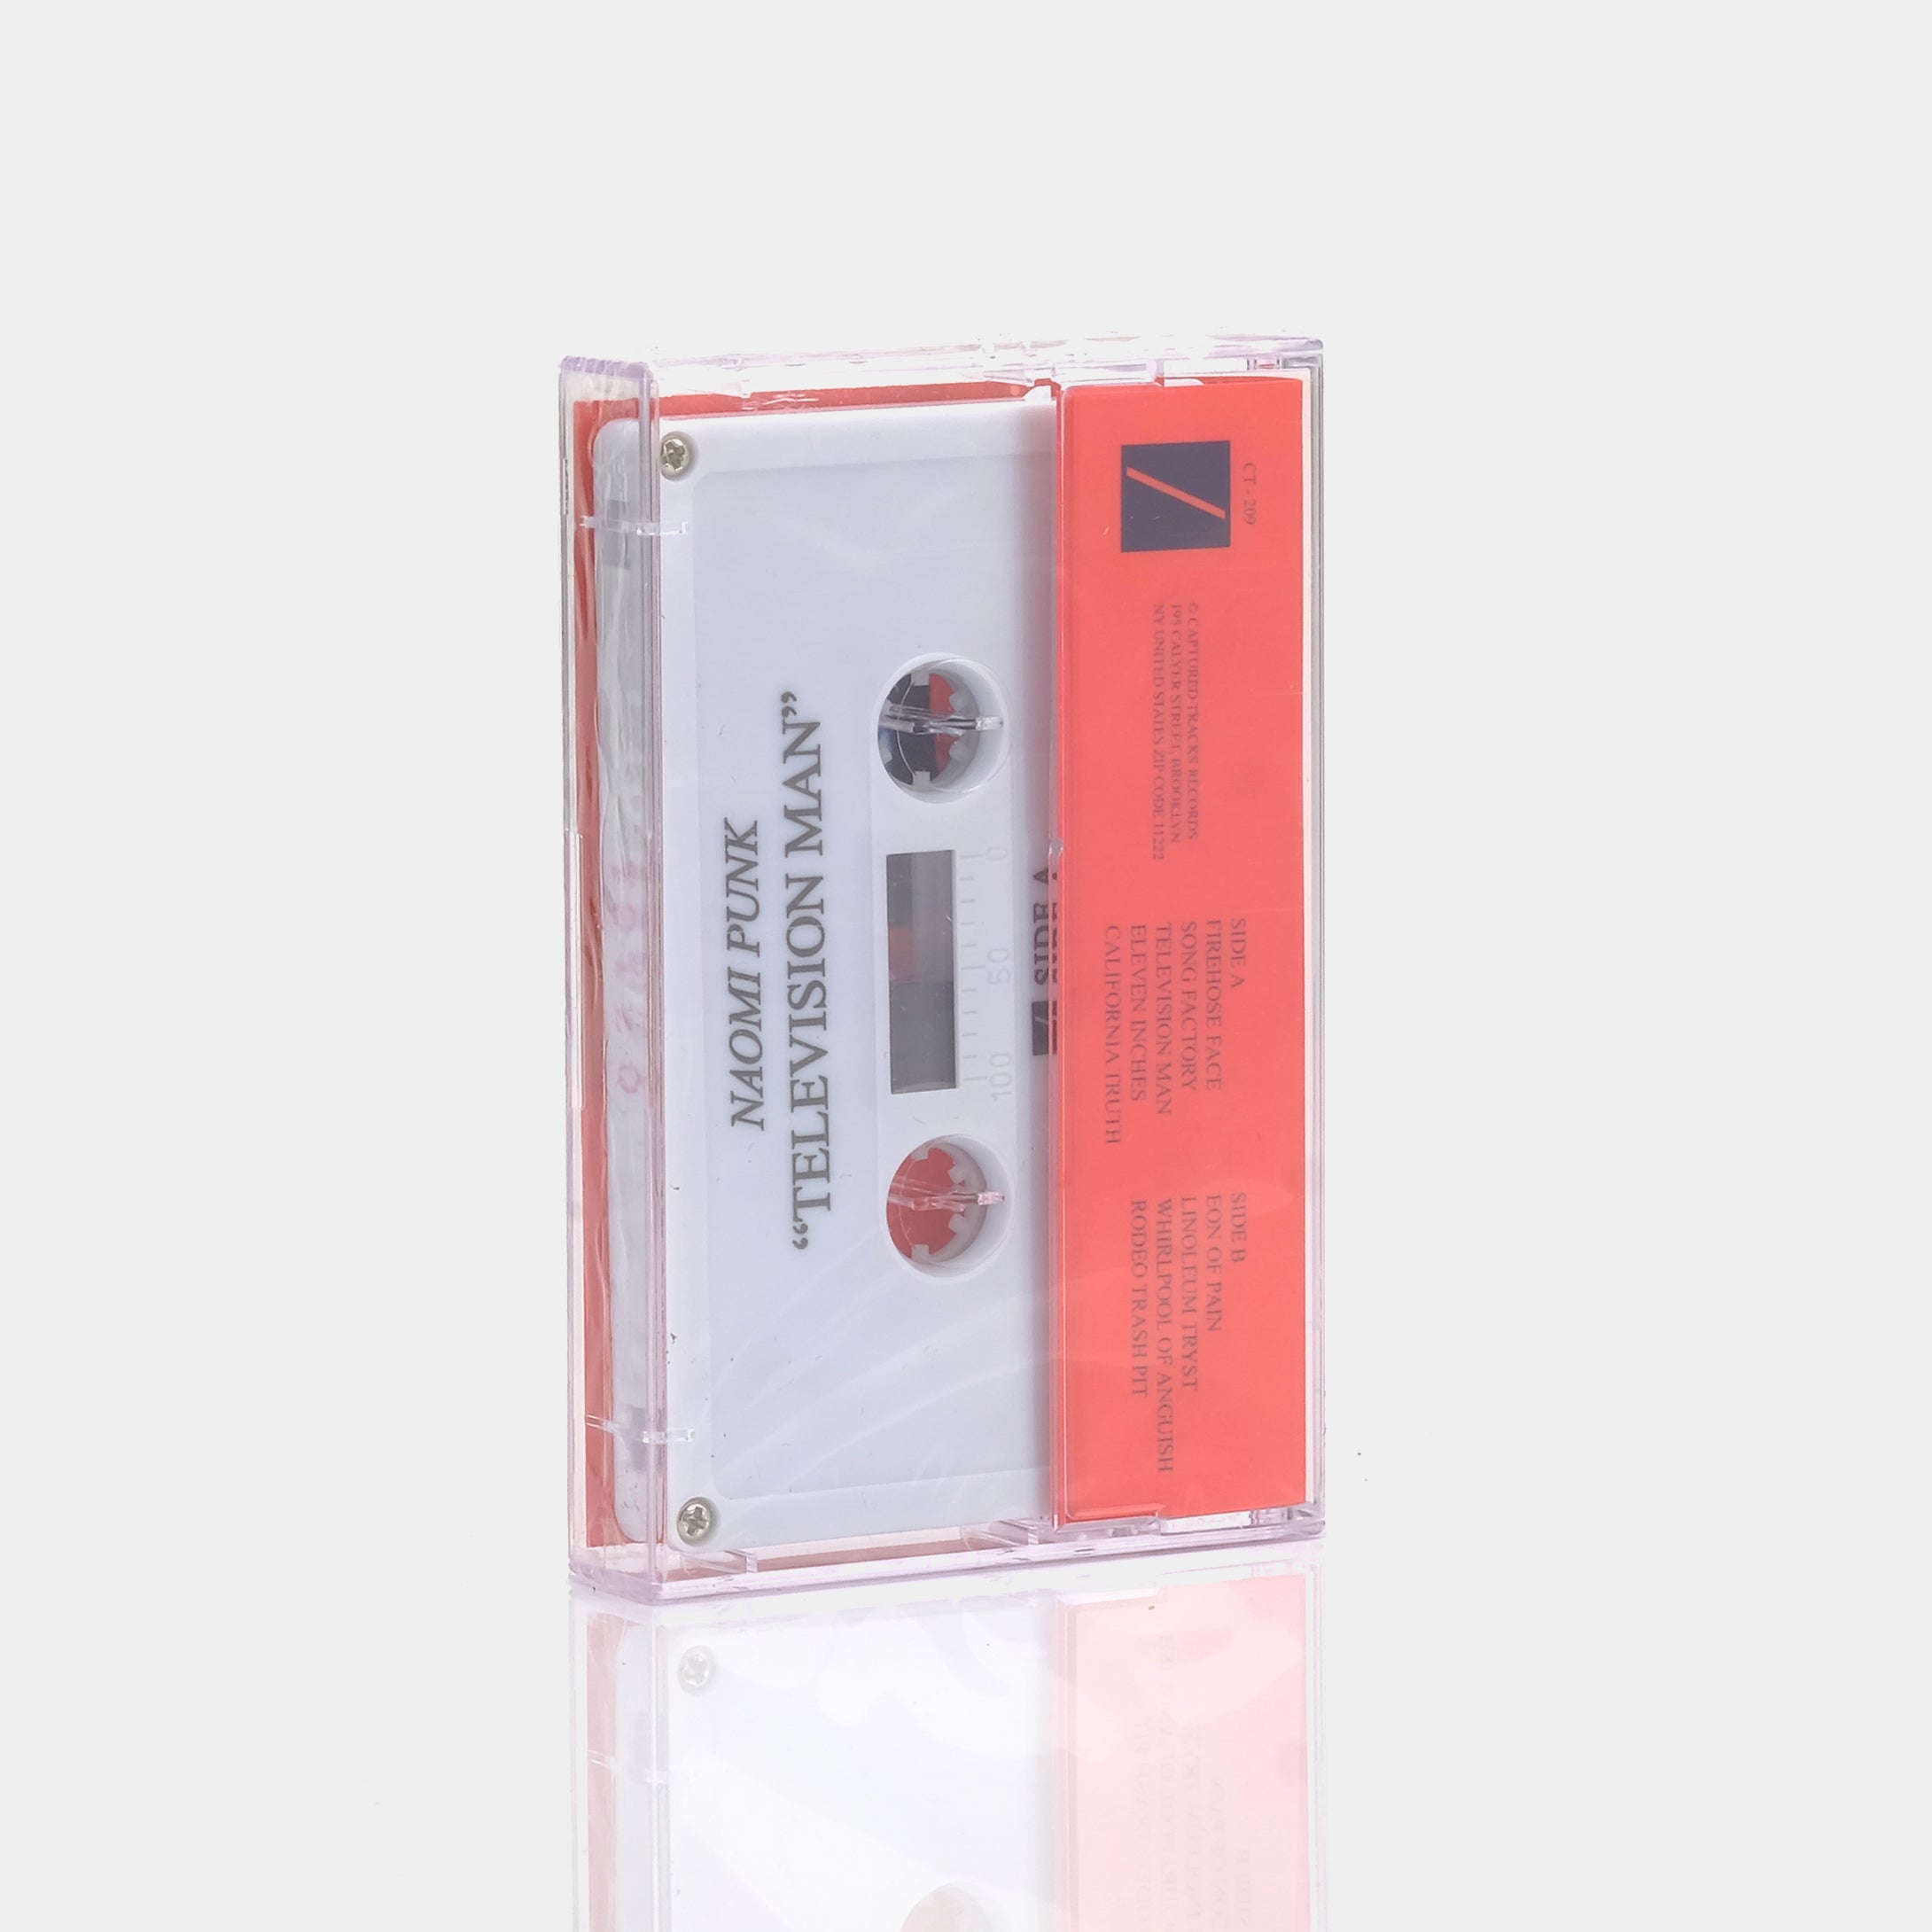 Naomi Punk - Television Man Cassette Tape